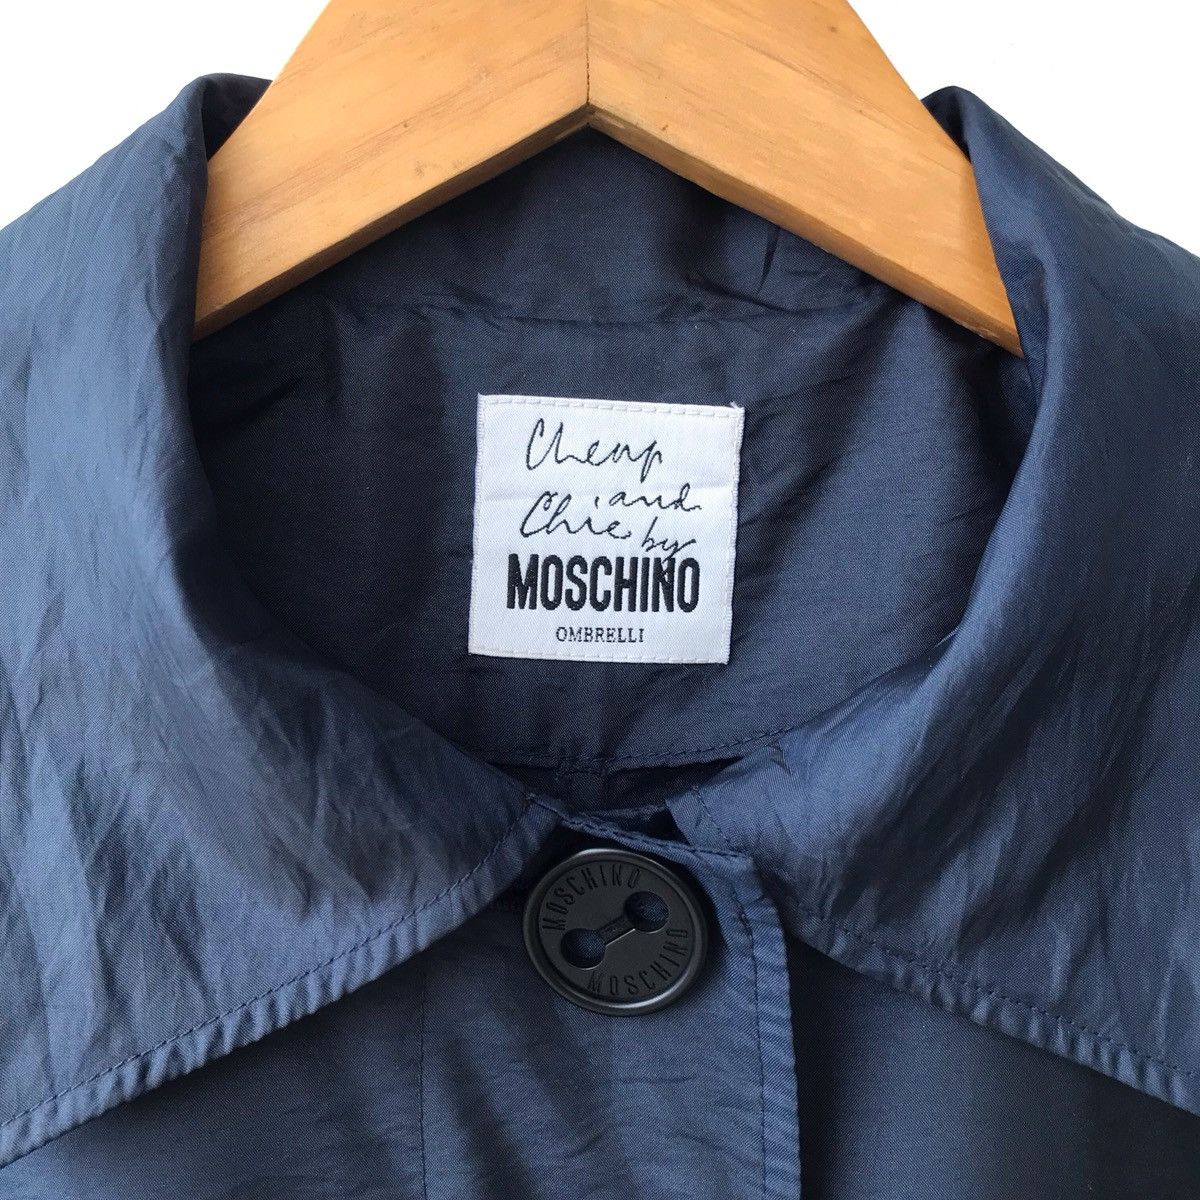 Moschino Cheap and Chic Moschino Ombrelli Nylon Windcoat Size S / US 4 / IT 40 - 3 Thumbnail